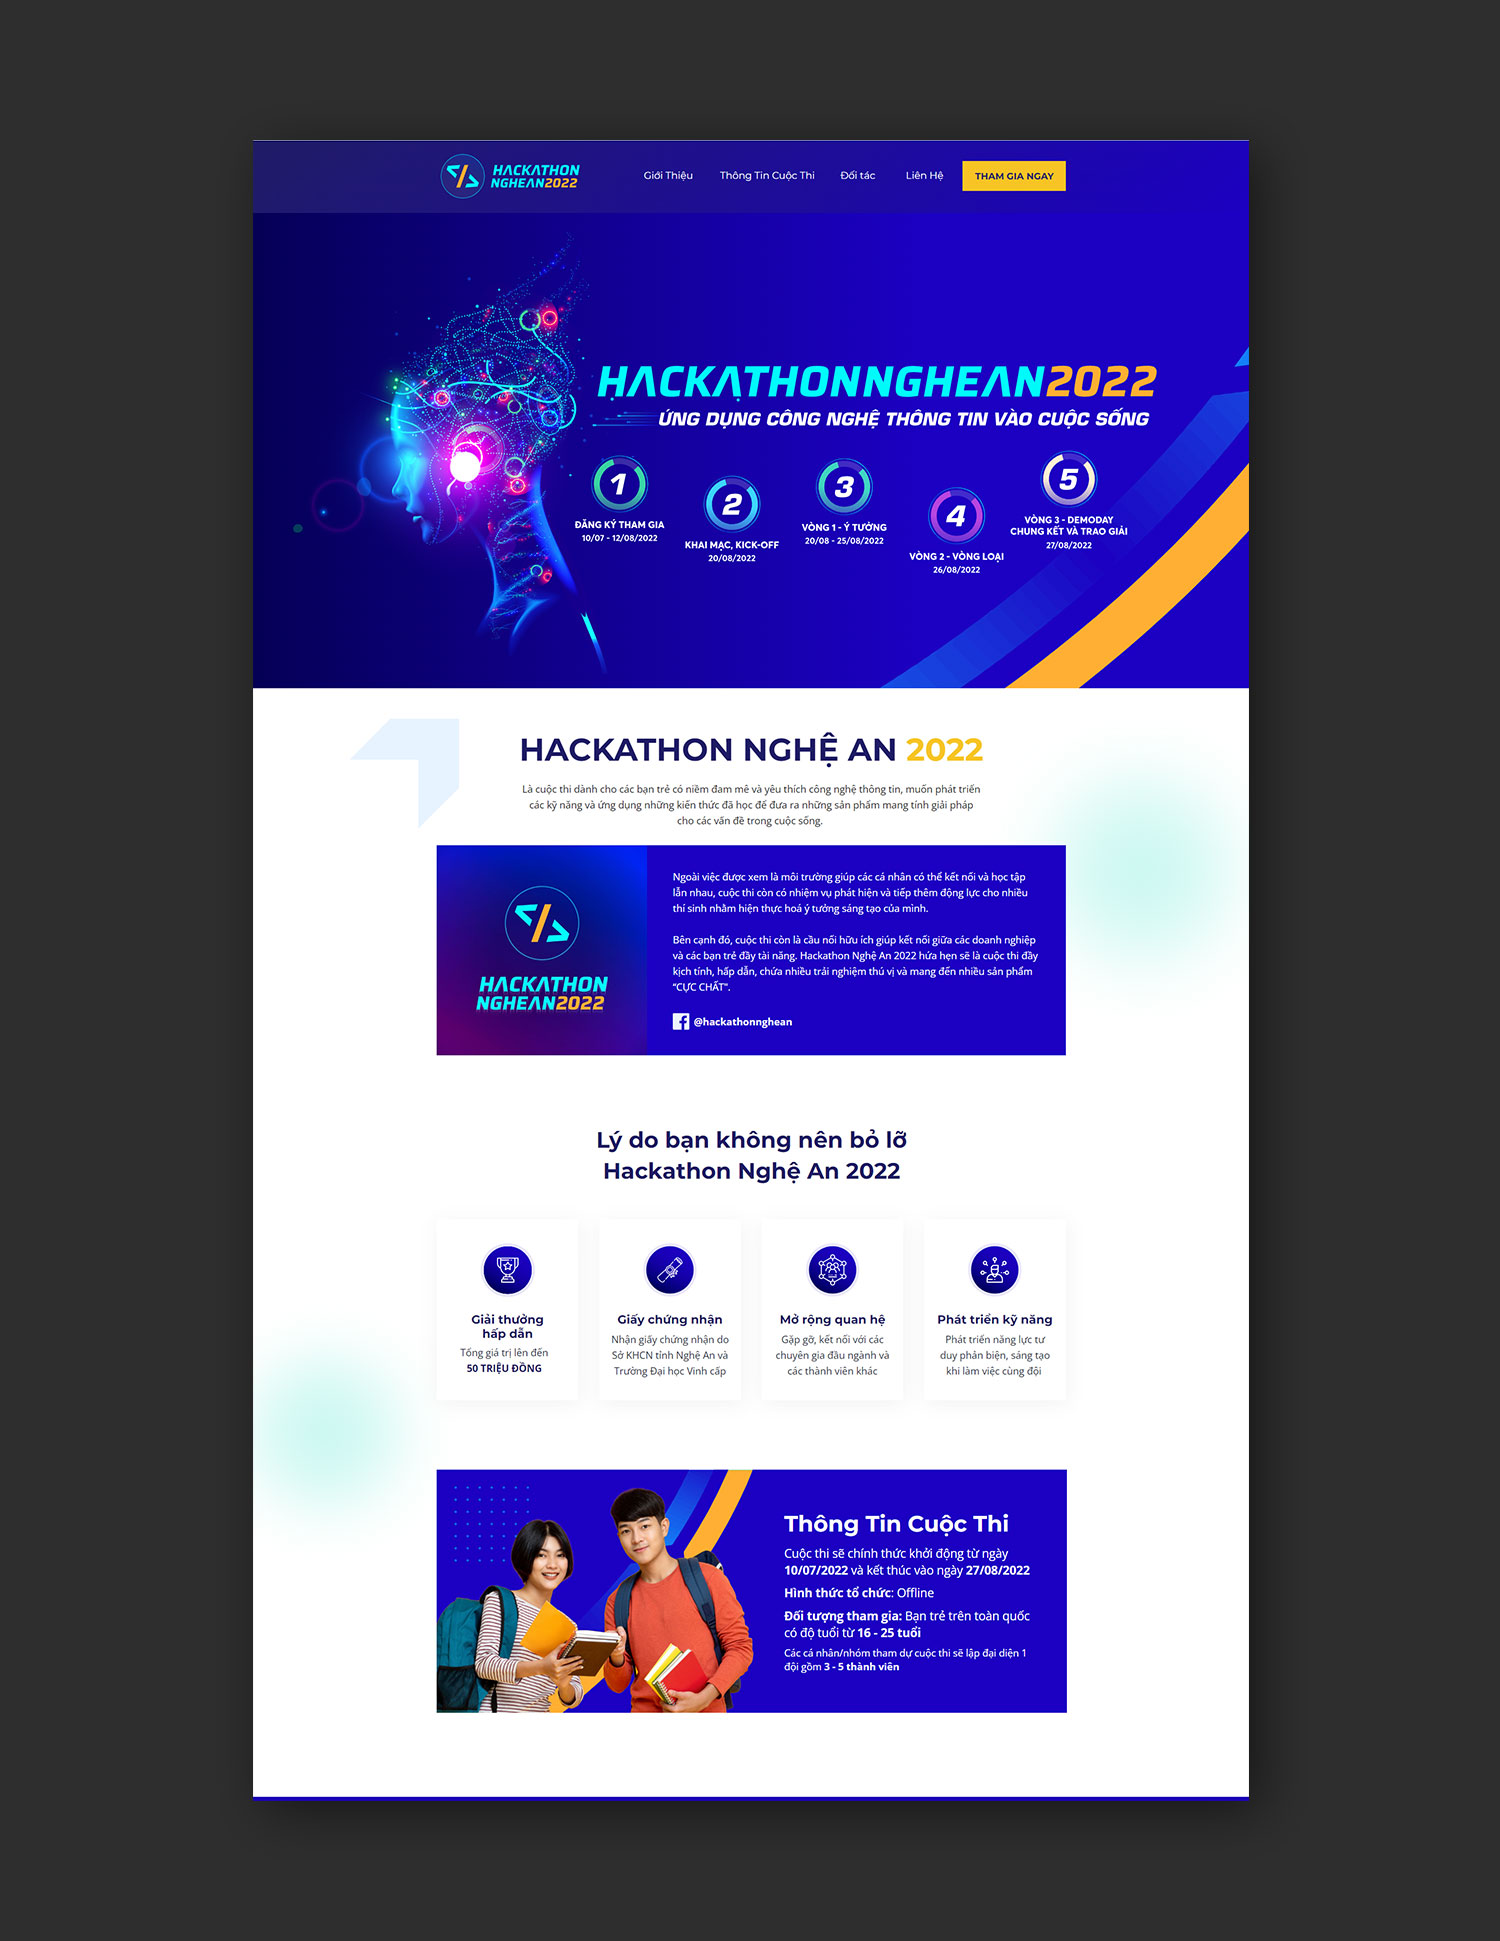 Hackathon Nghệ An 2022 | Hackathonnghean.vn